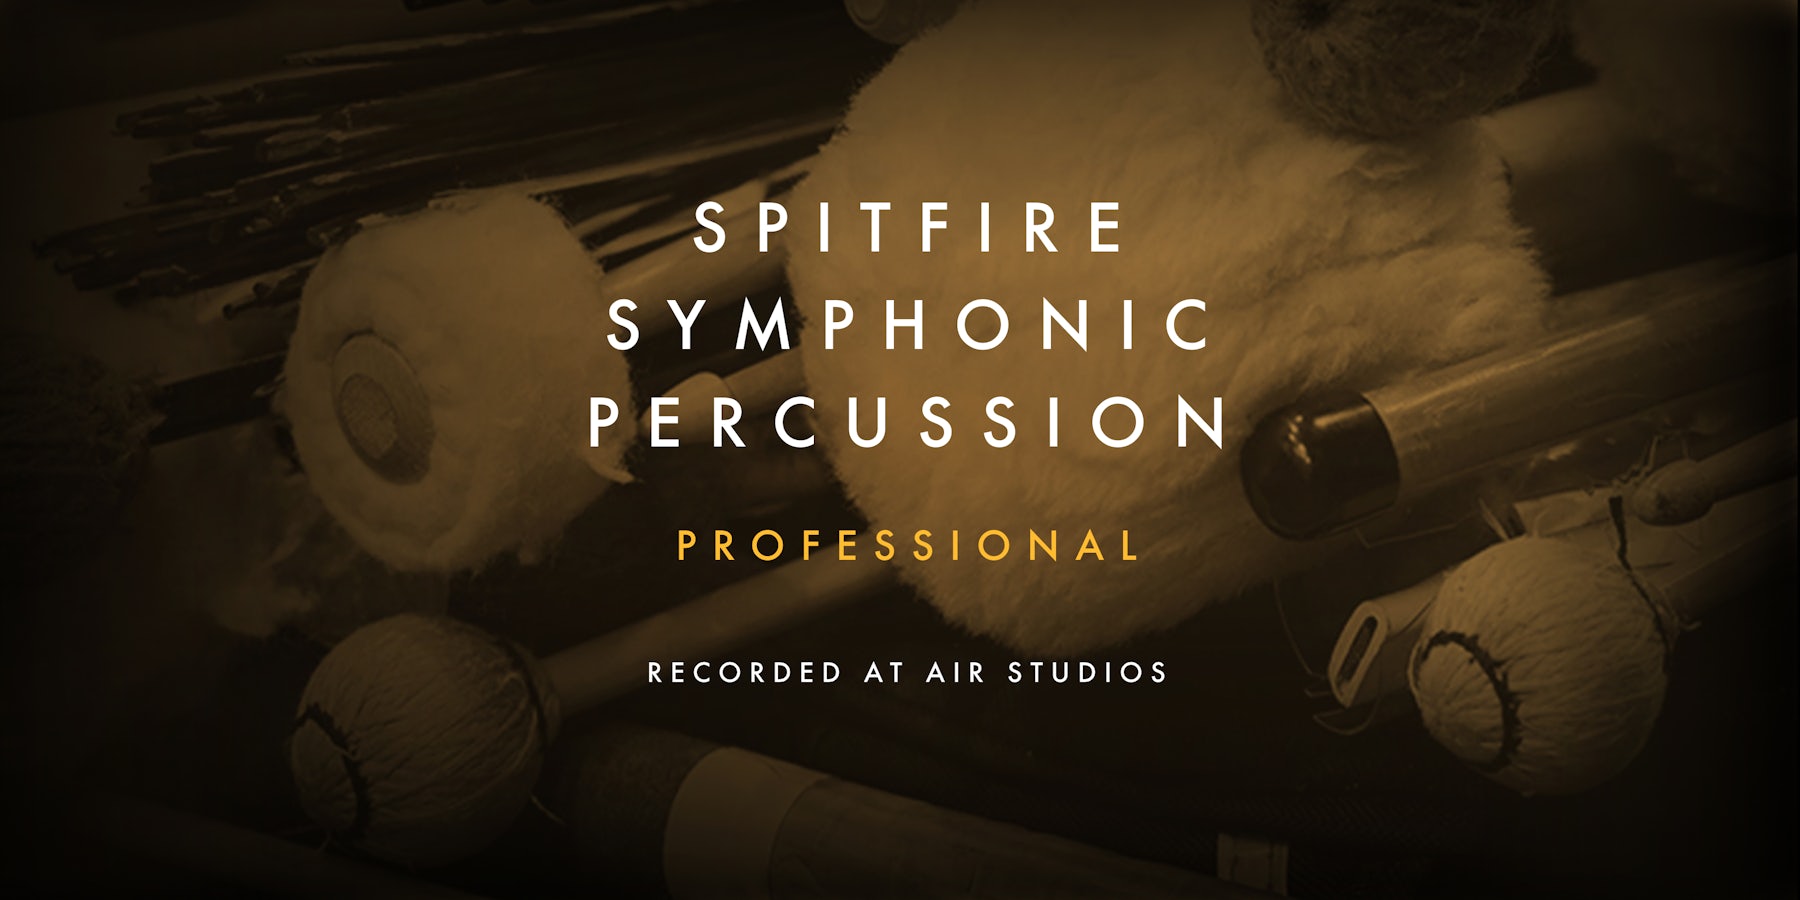 Spitfire Symphonic Percussion Professional artwork